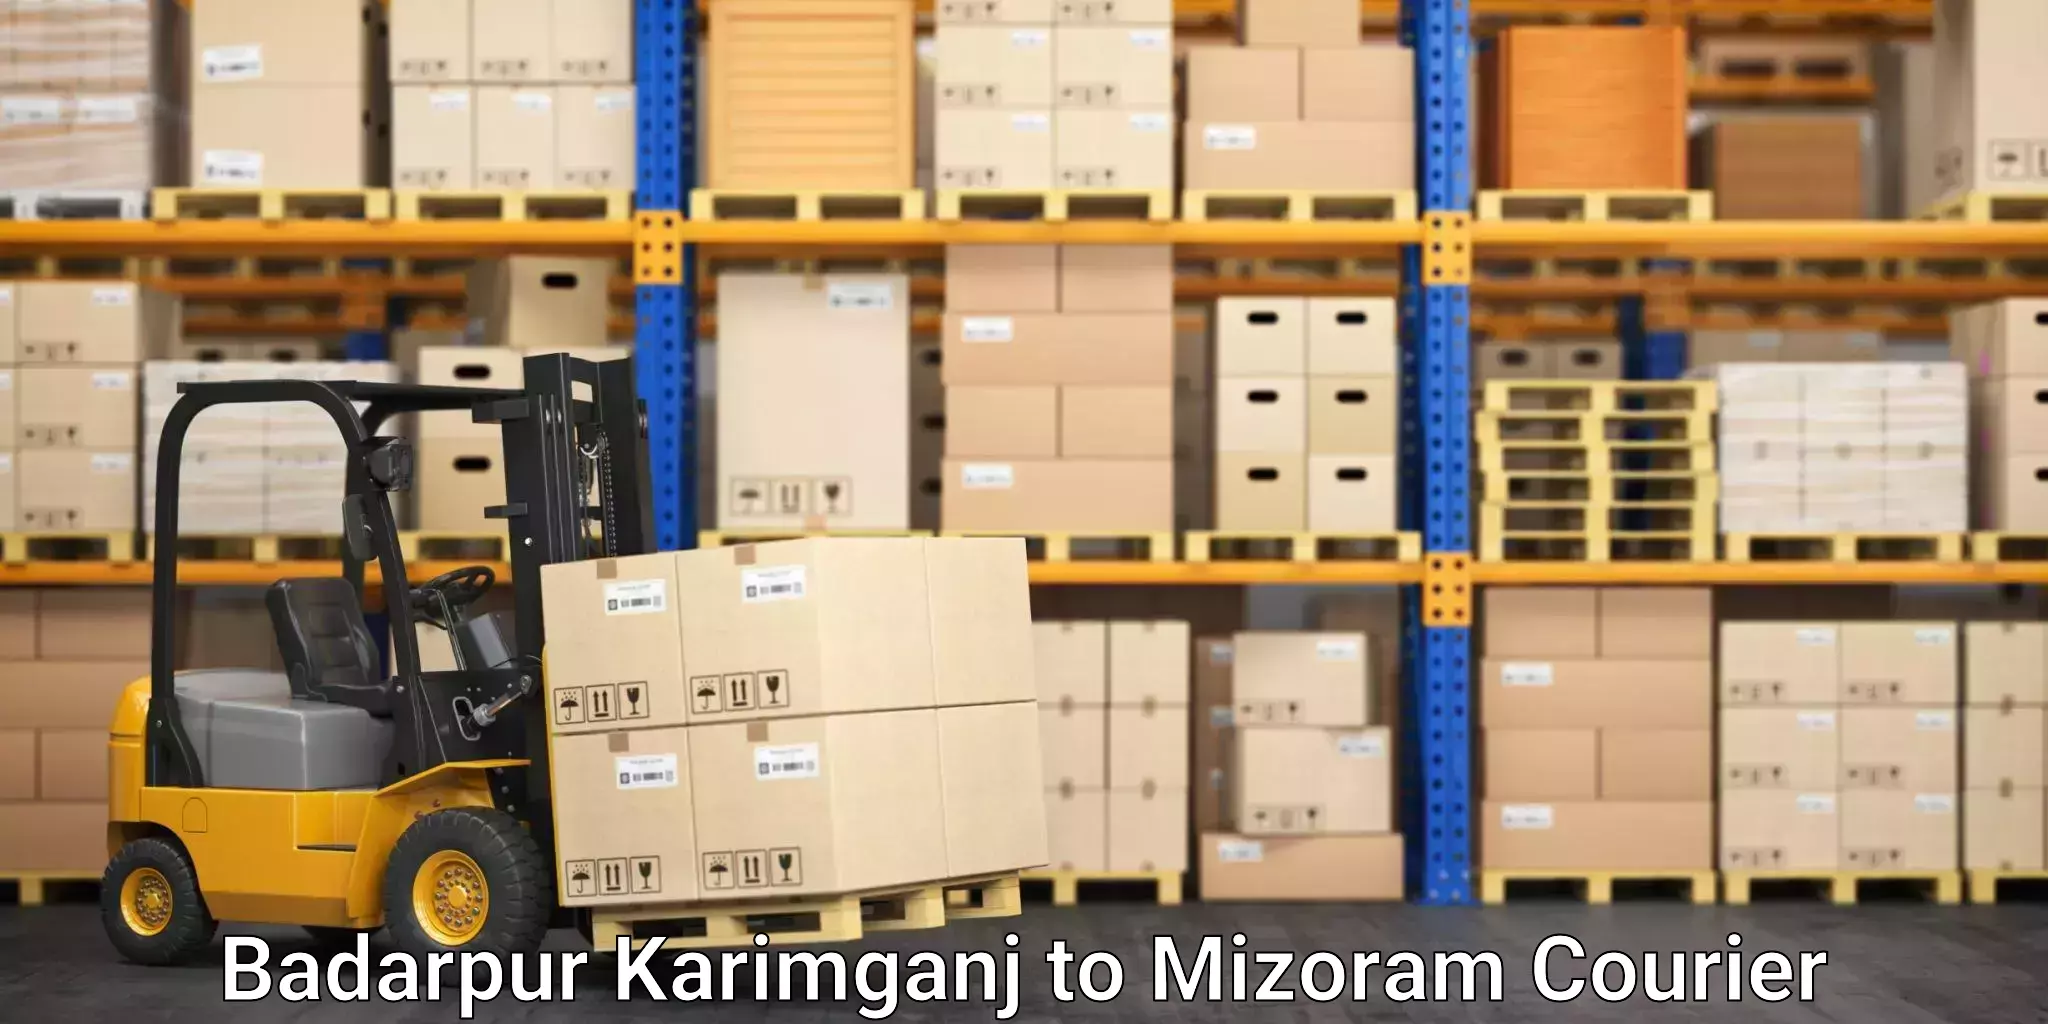 Reliable shipping partners Badarpur Karimganj to Champhai